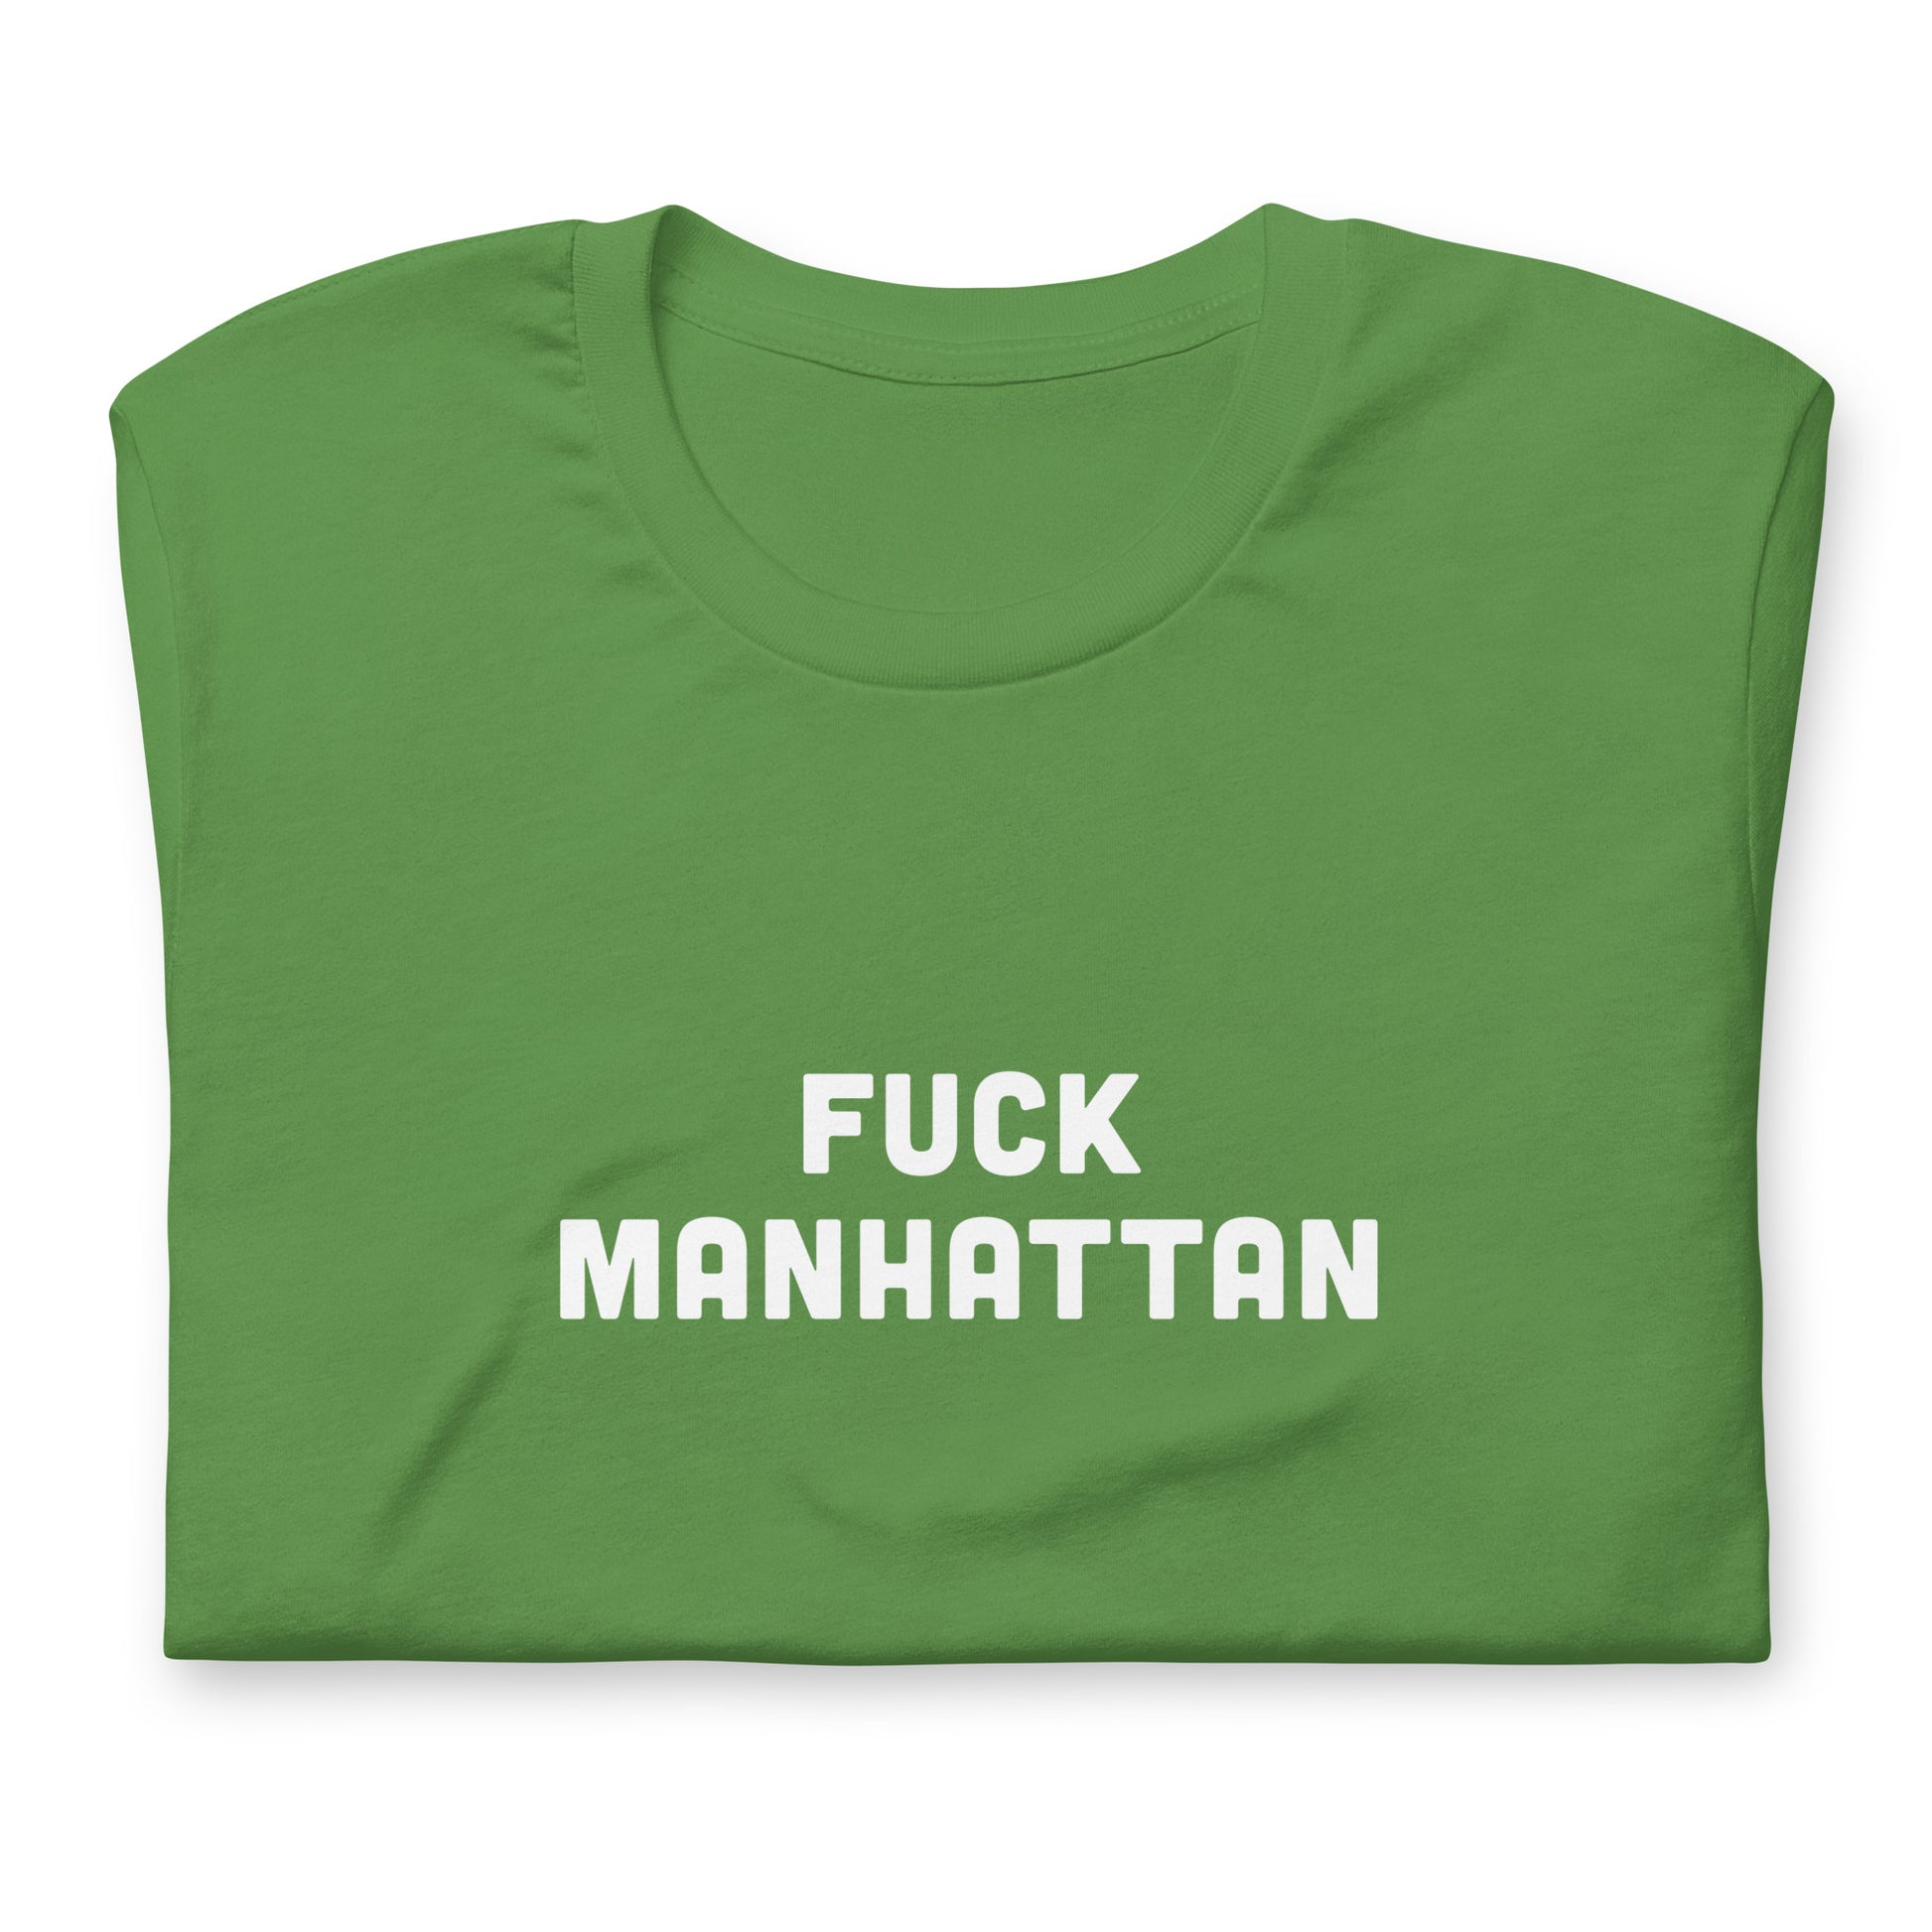 Fuck Manhattan T-Shirt Size M Color Forest